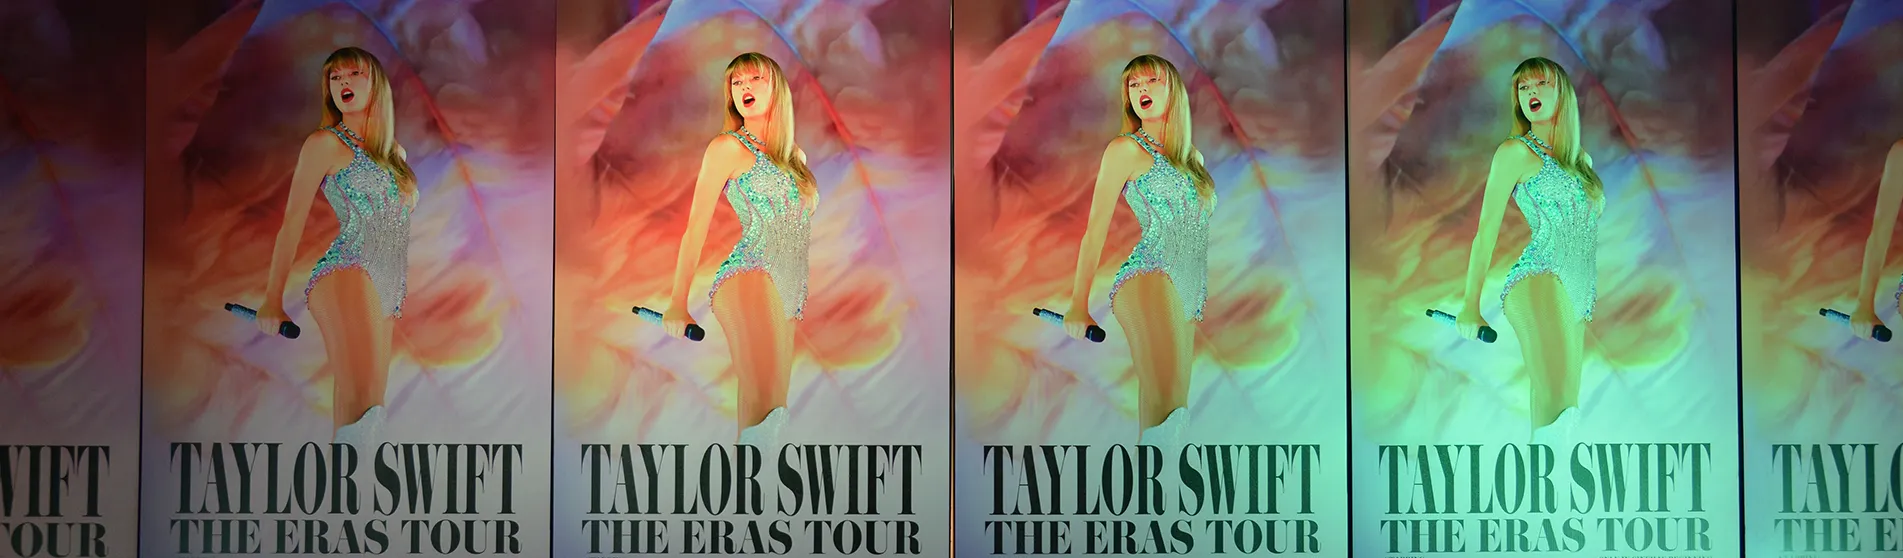 Taylor Swift Eras Tour posters